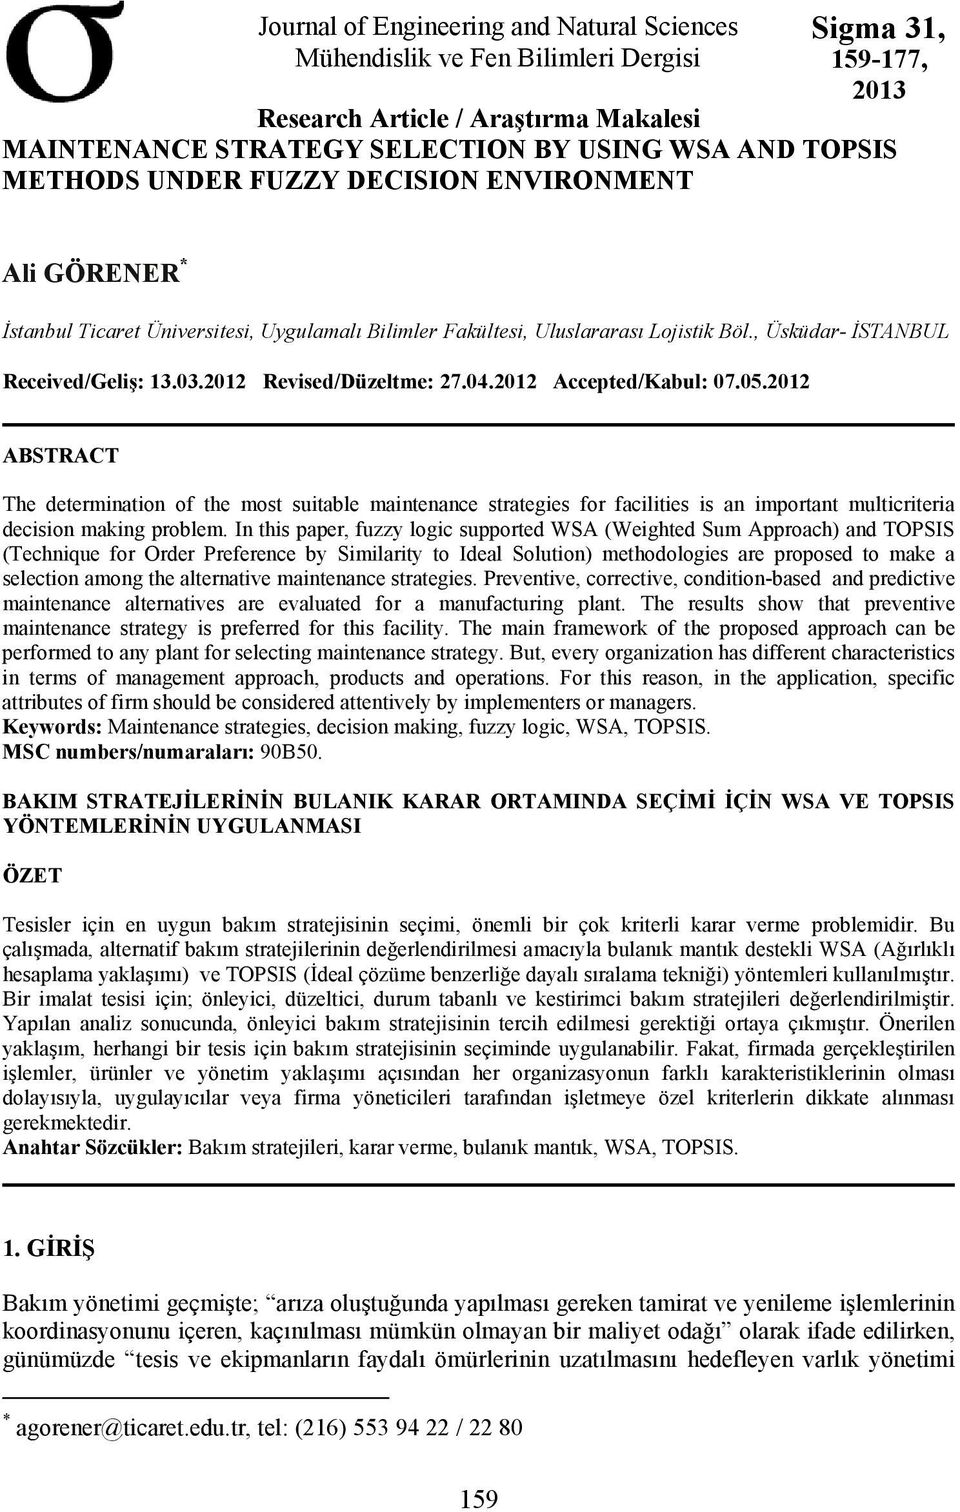 2012 Revised/Düzeltme: 27.04.2012 Accepted/Kabul: 07.05.